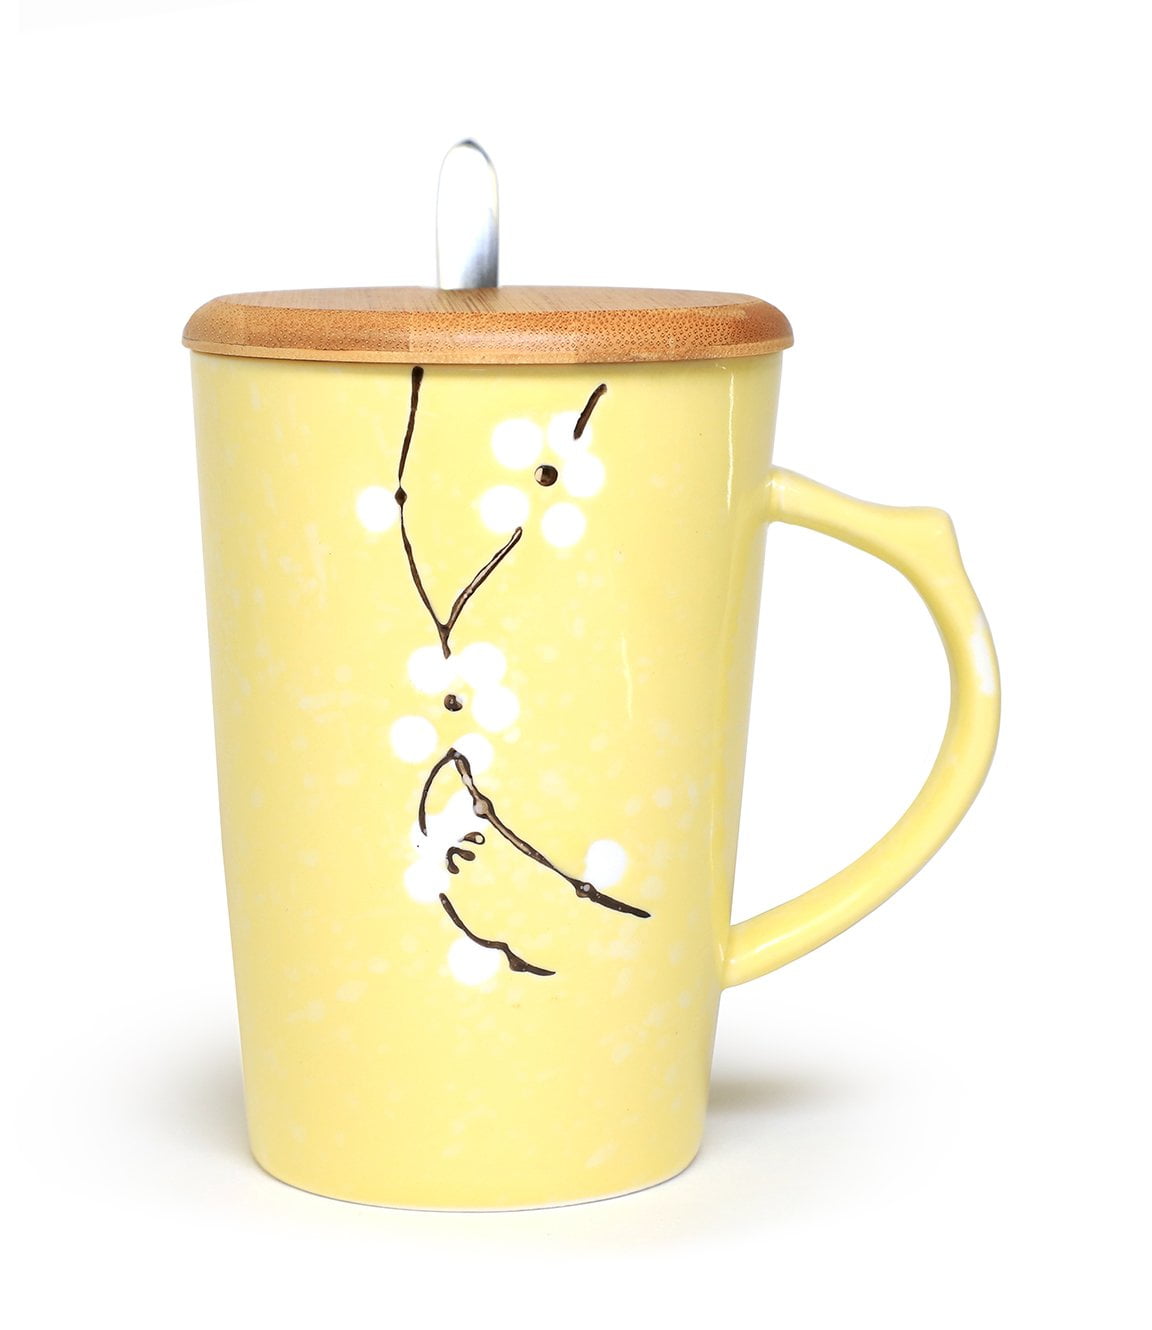 Starbucks Red Lovely Ceramic Cup set w/ lid coaster spoon Coffee Mug Sakura Gift